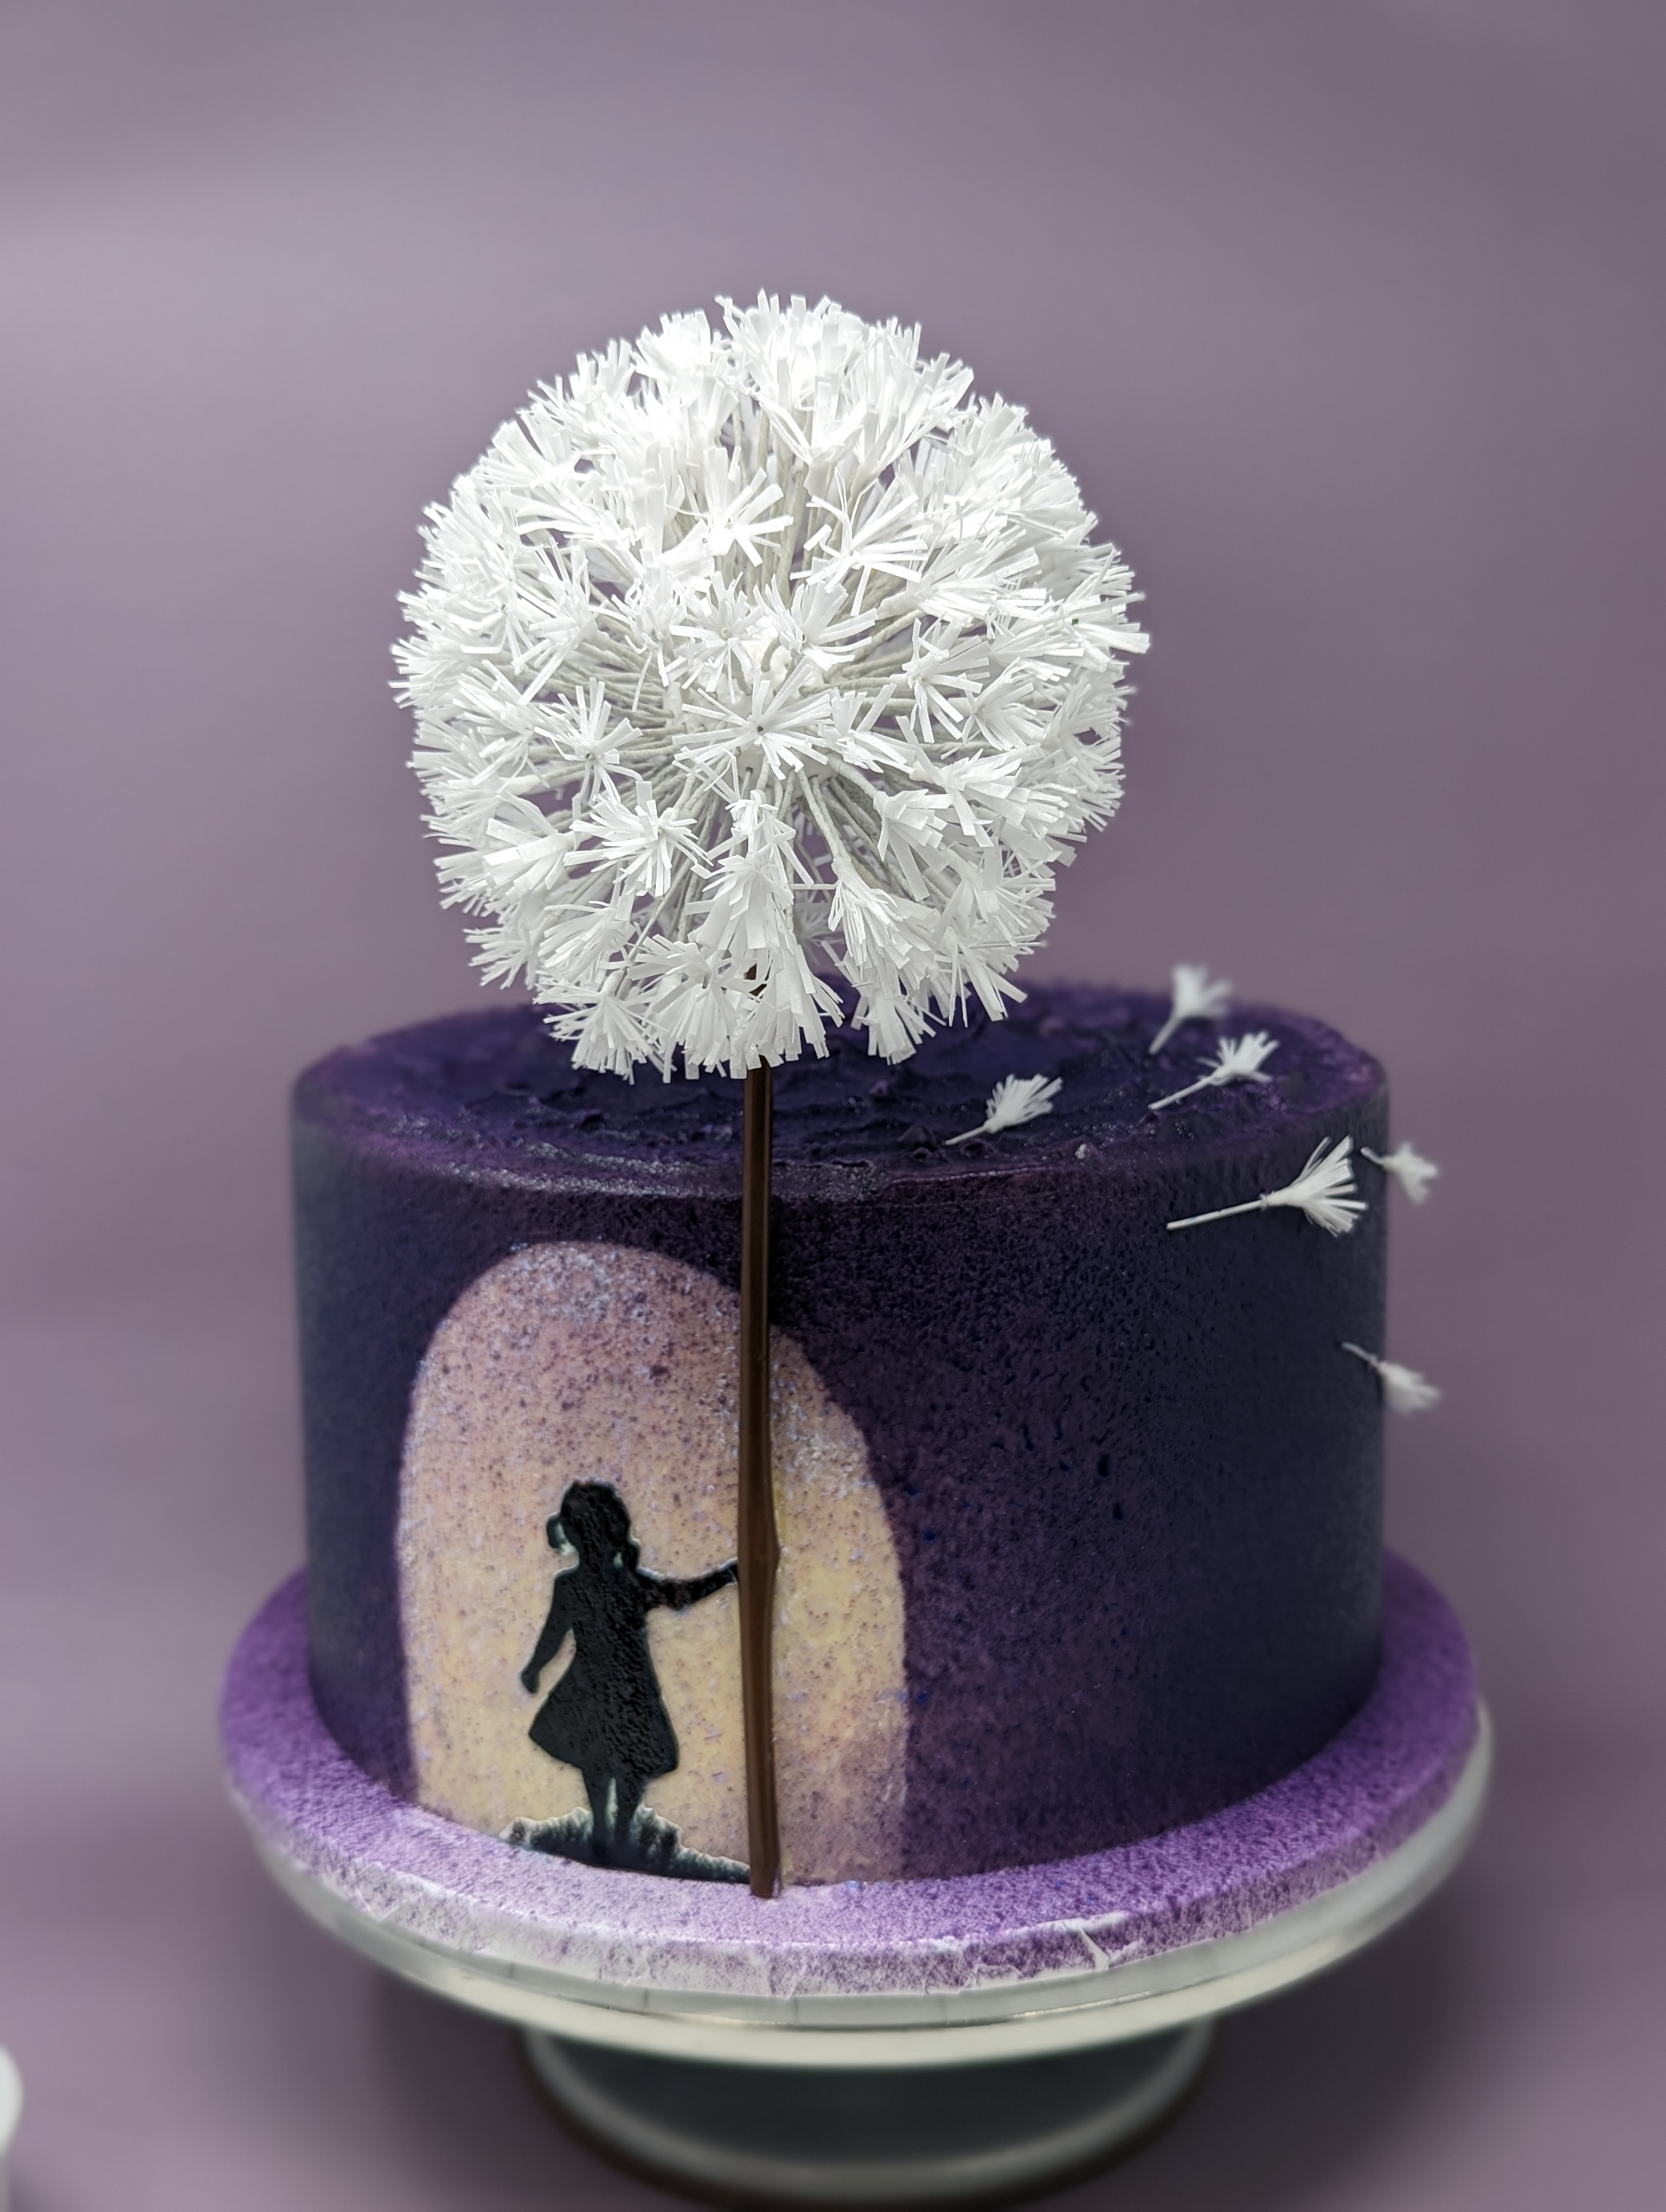 Image of Cake